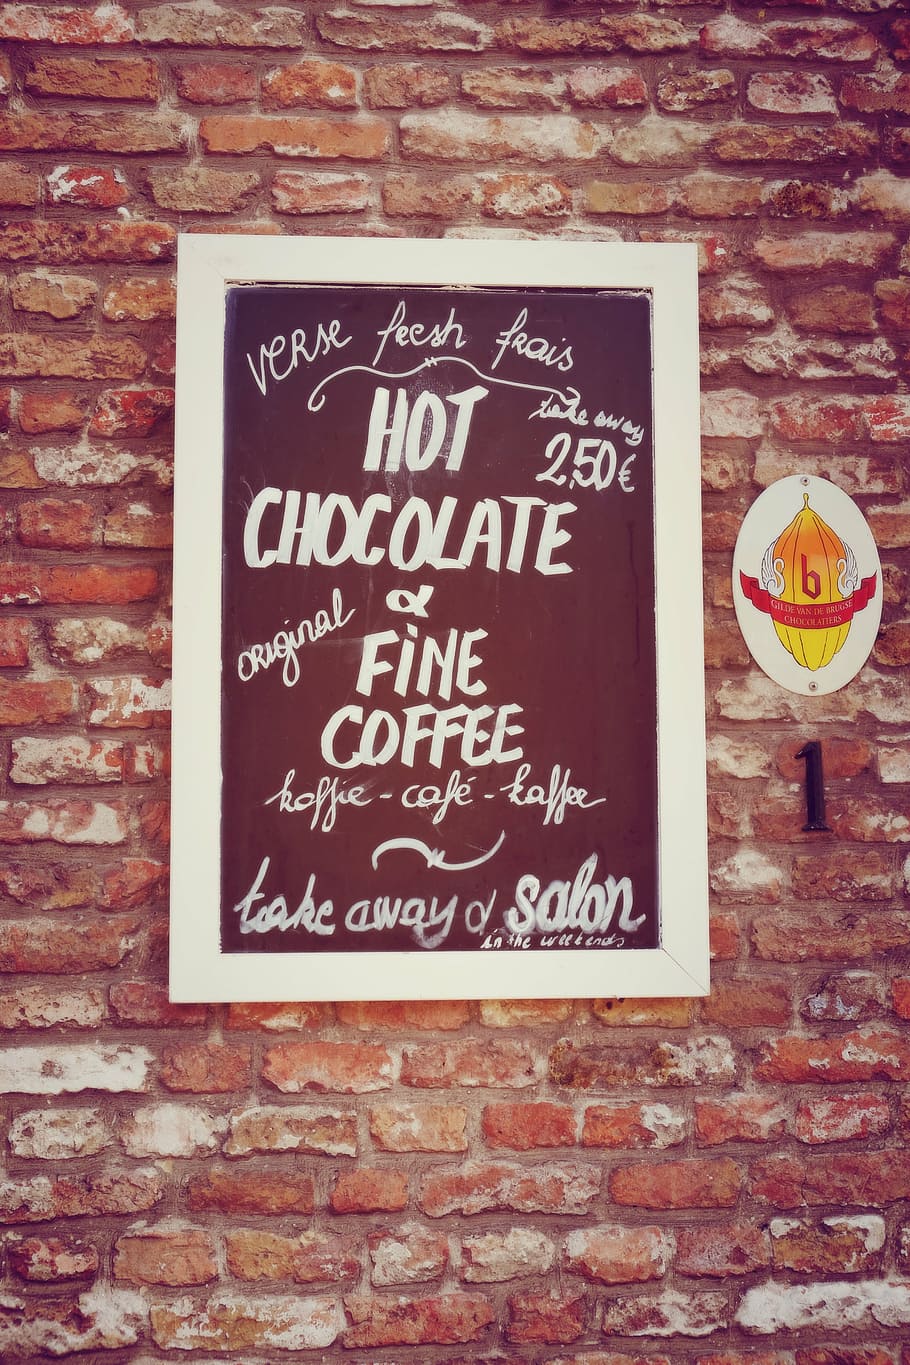 Hot Chocolate signage, menu, coffee, coffee shop, brugge, bruges